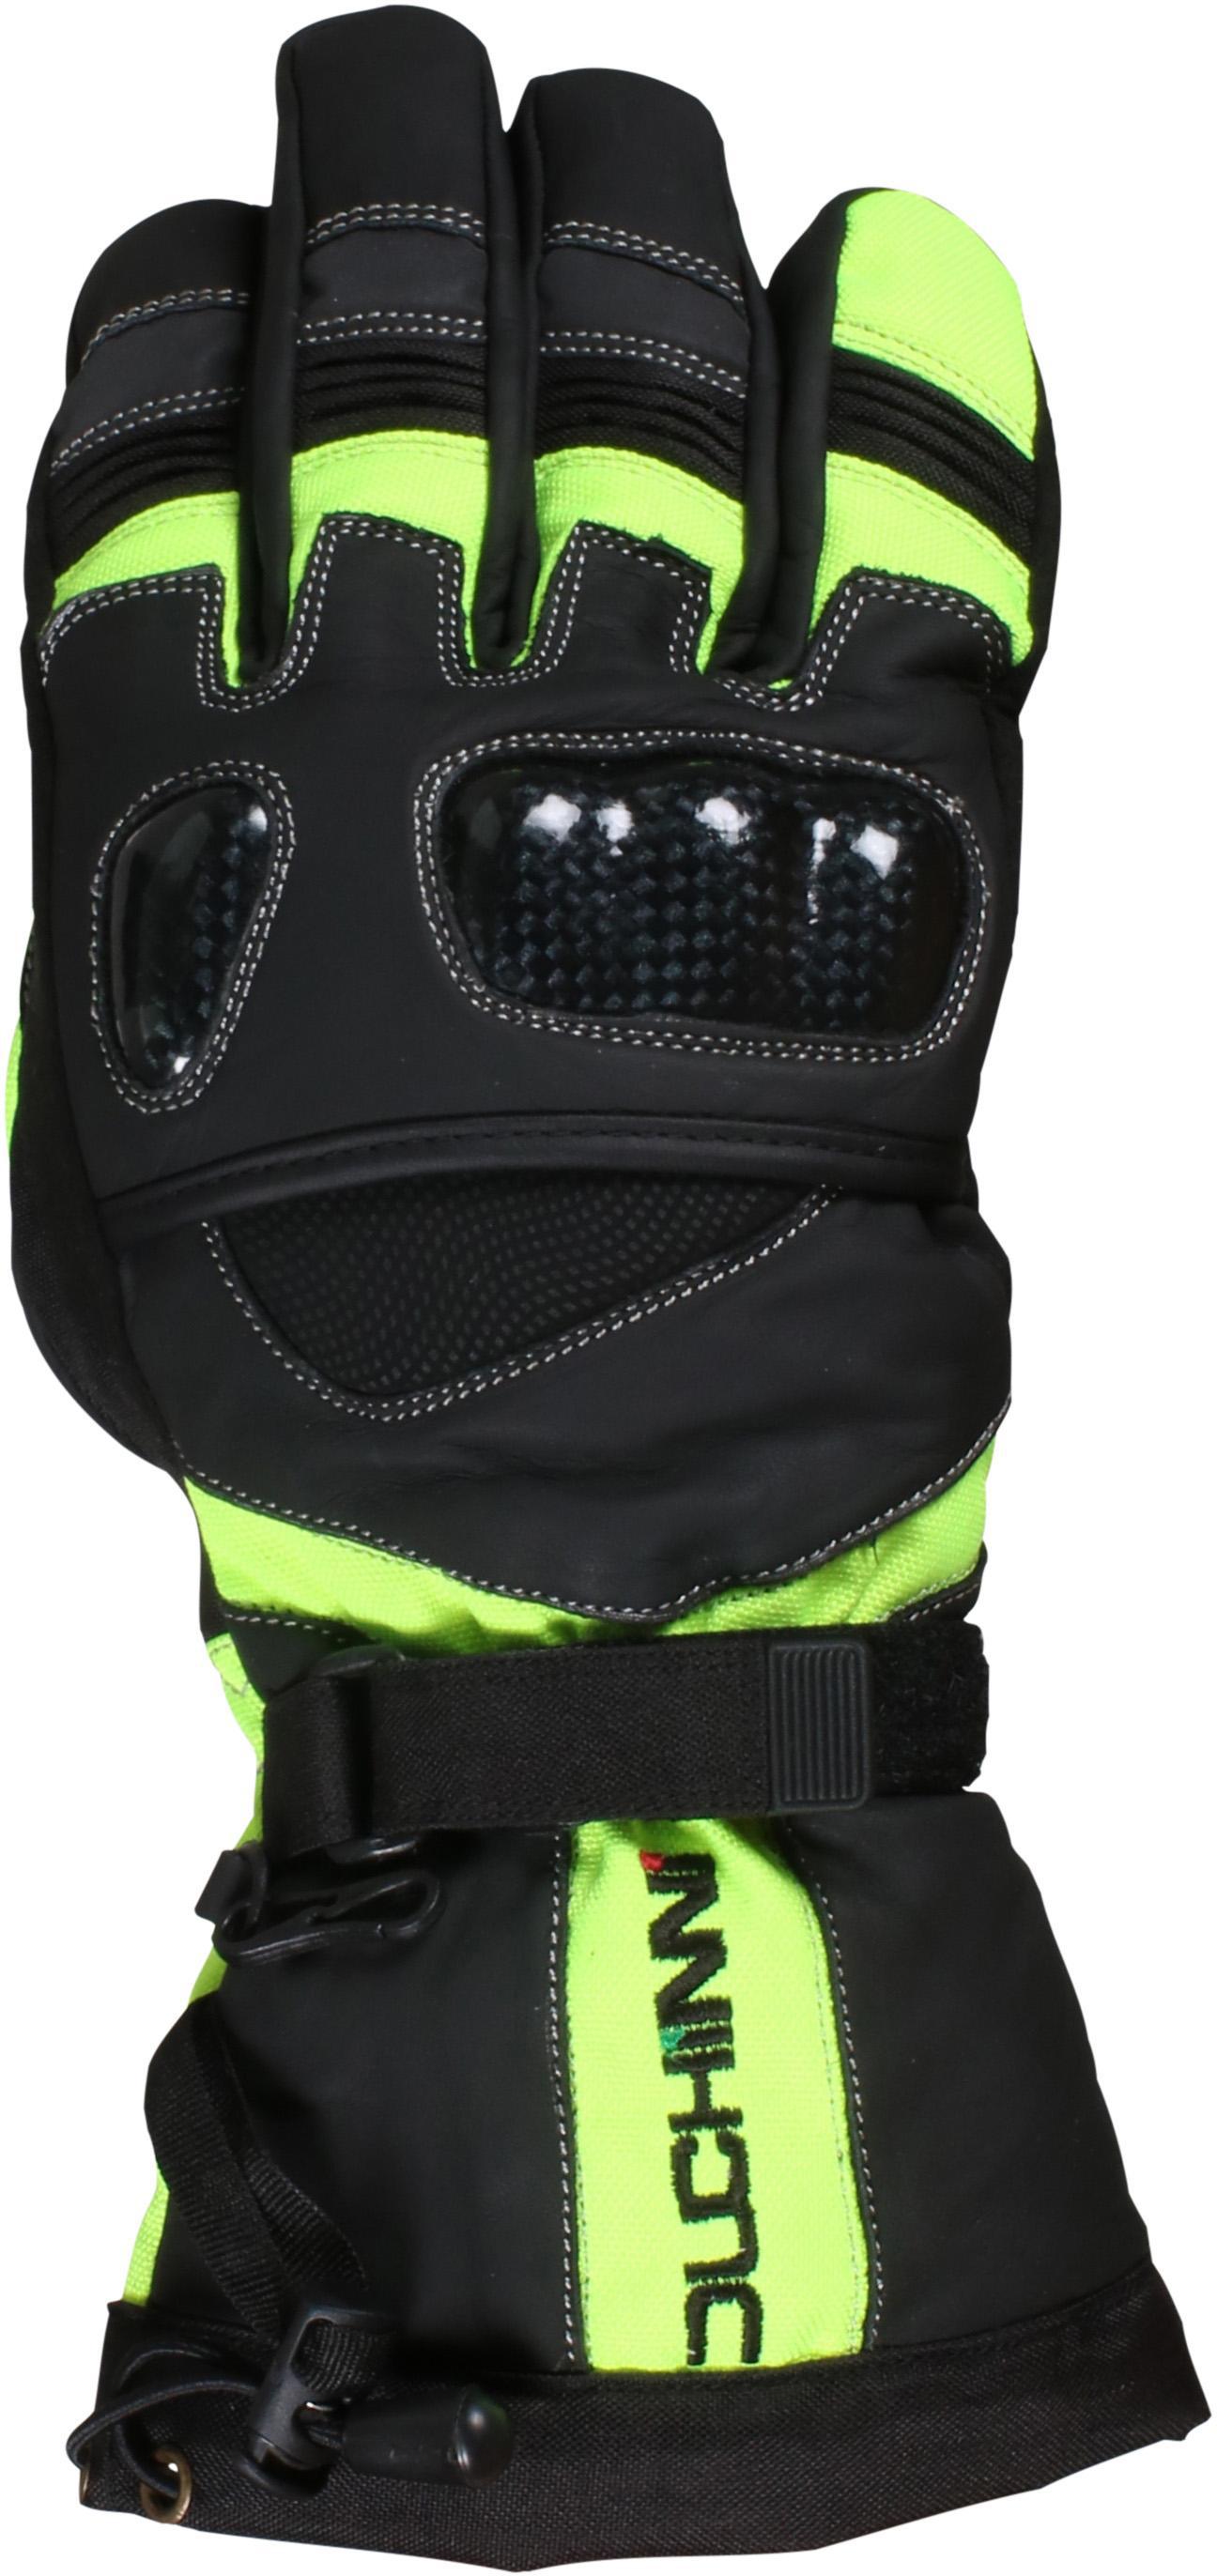 Duchinni Yukon Motorcycle Gloves - Black And Neon, M